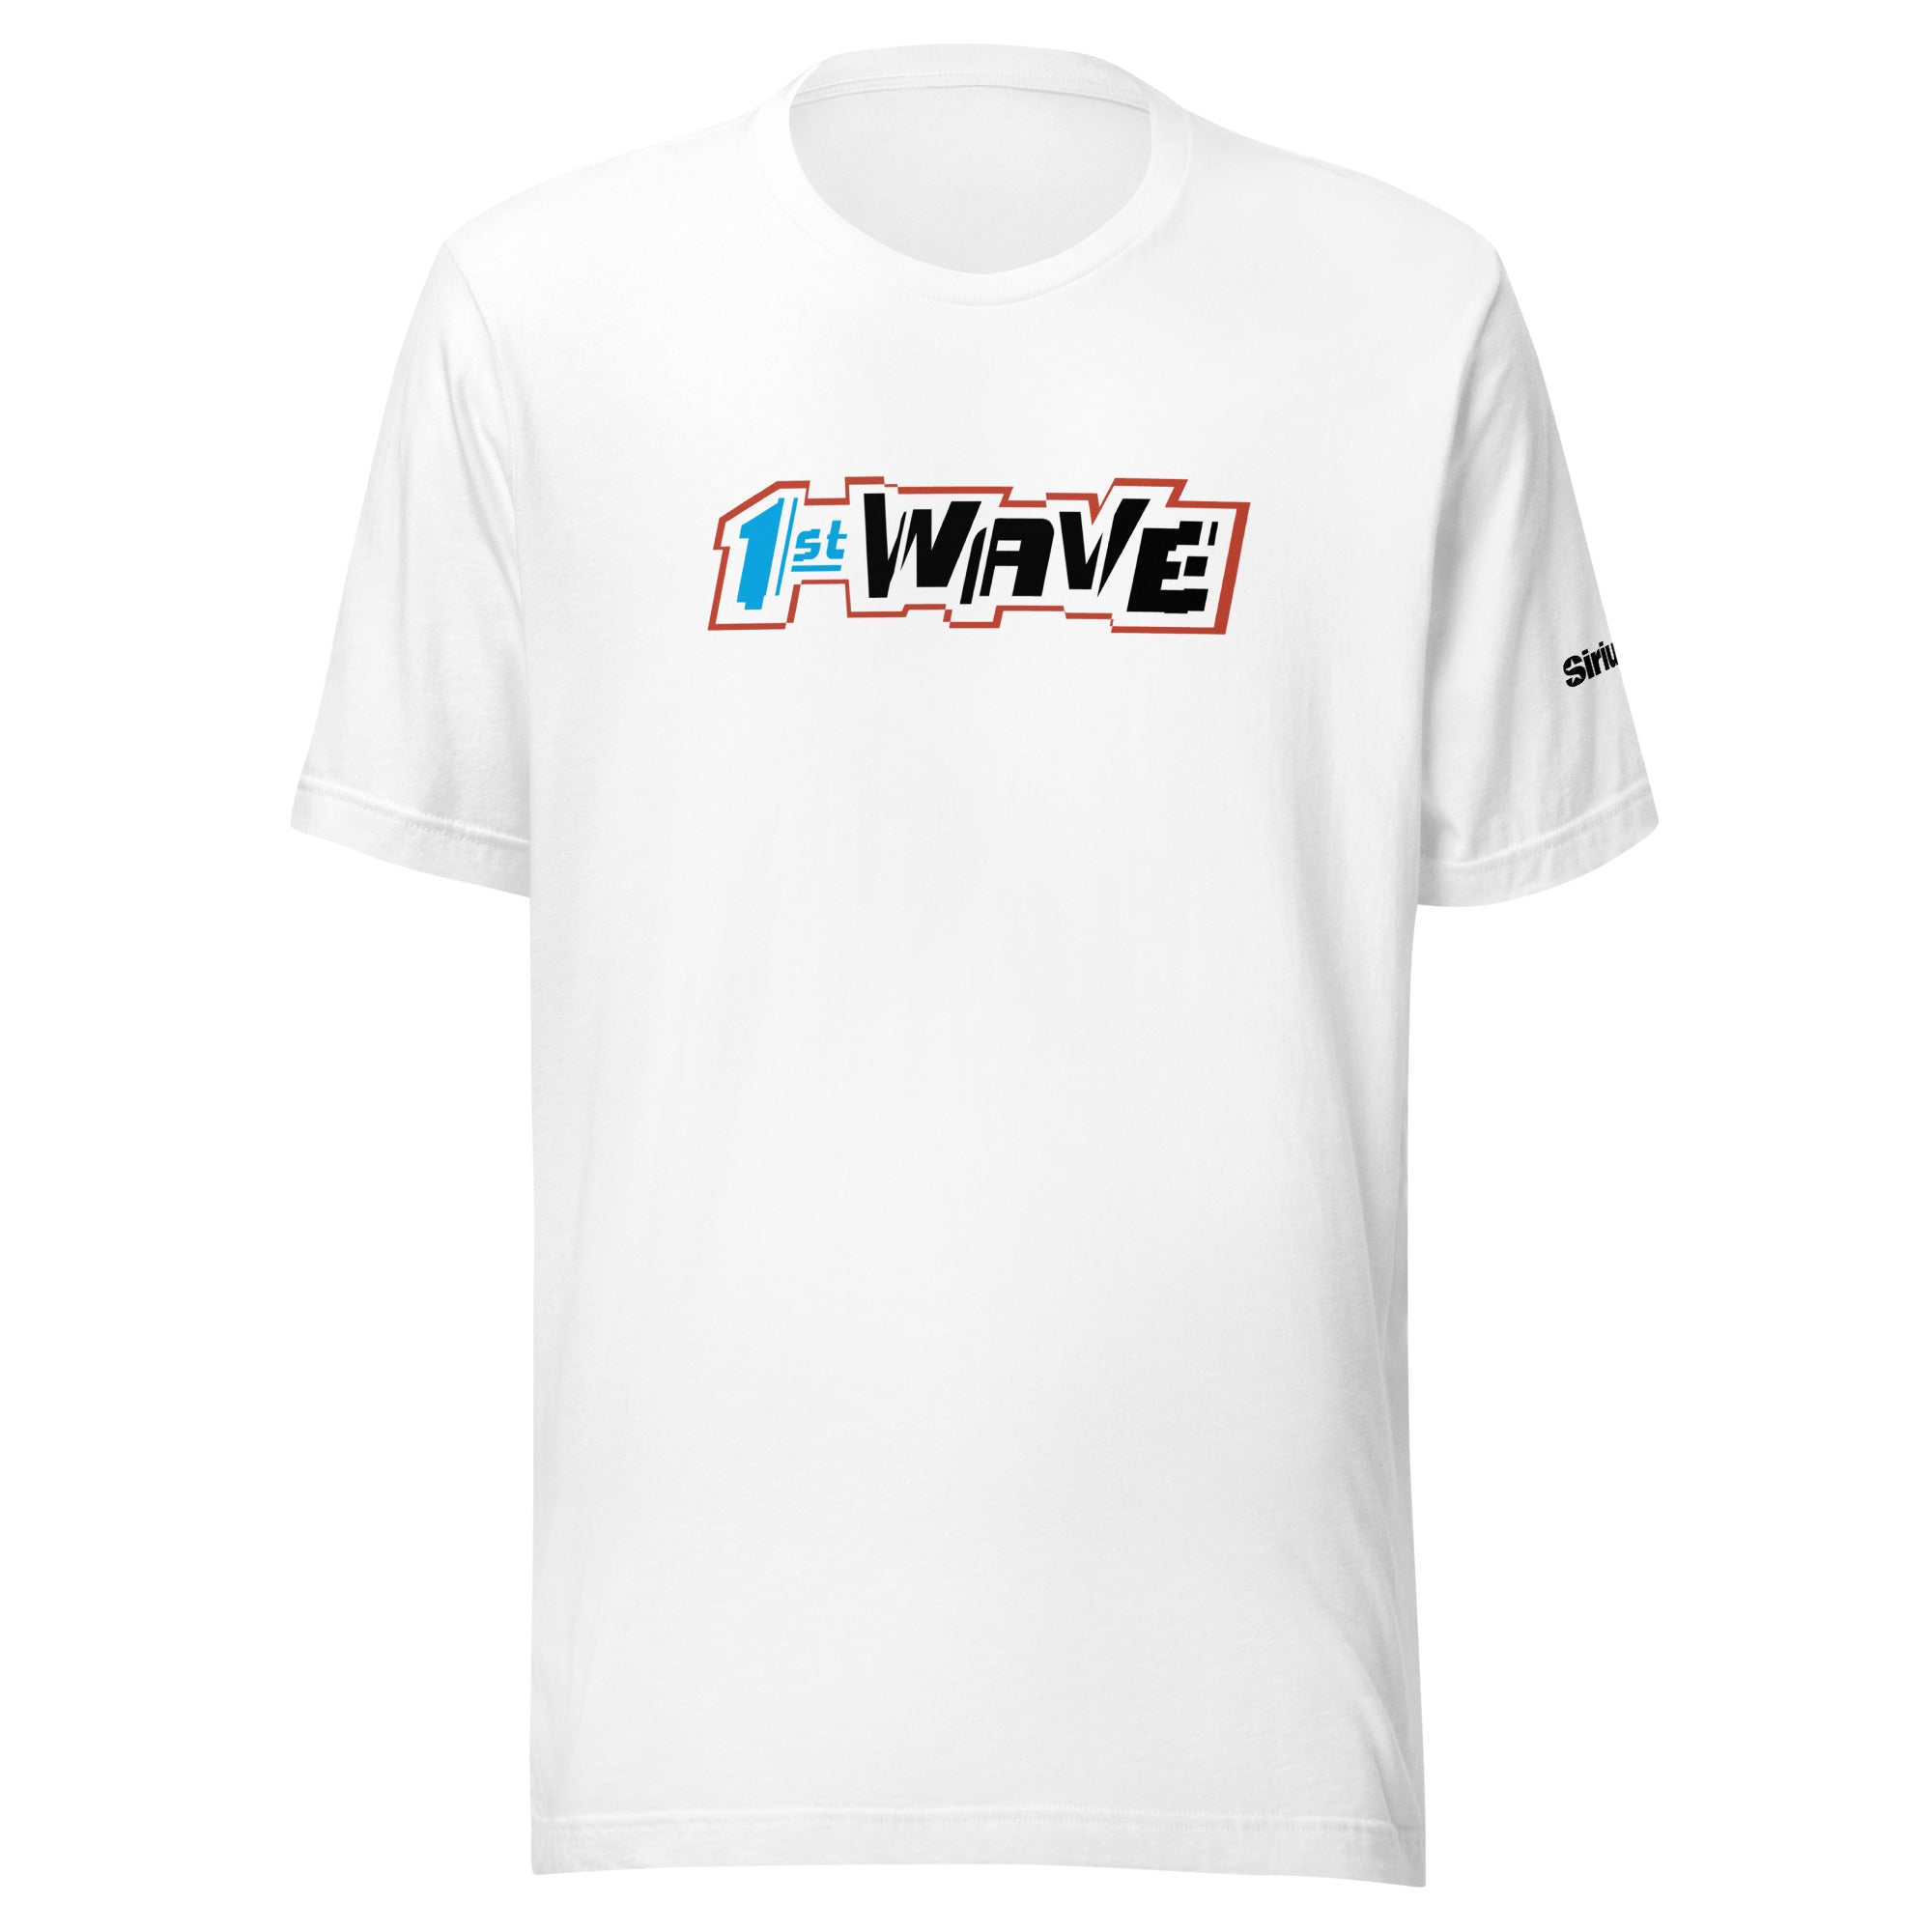 1st Wave: T-shirt (White)